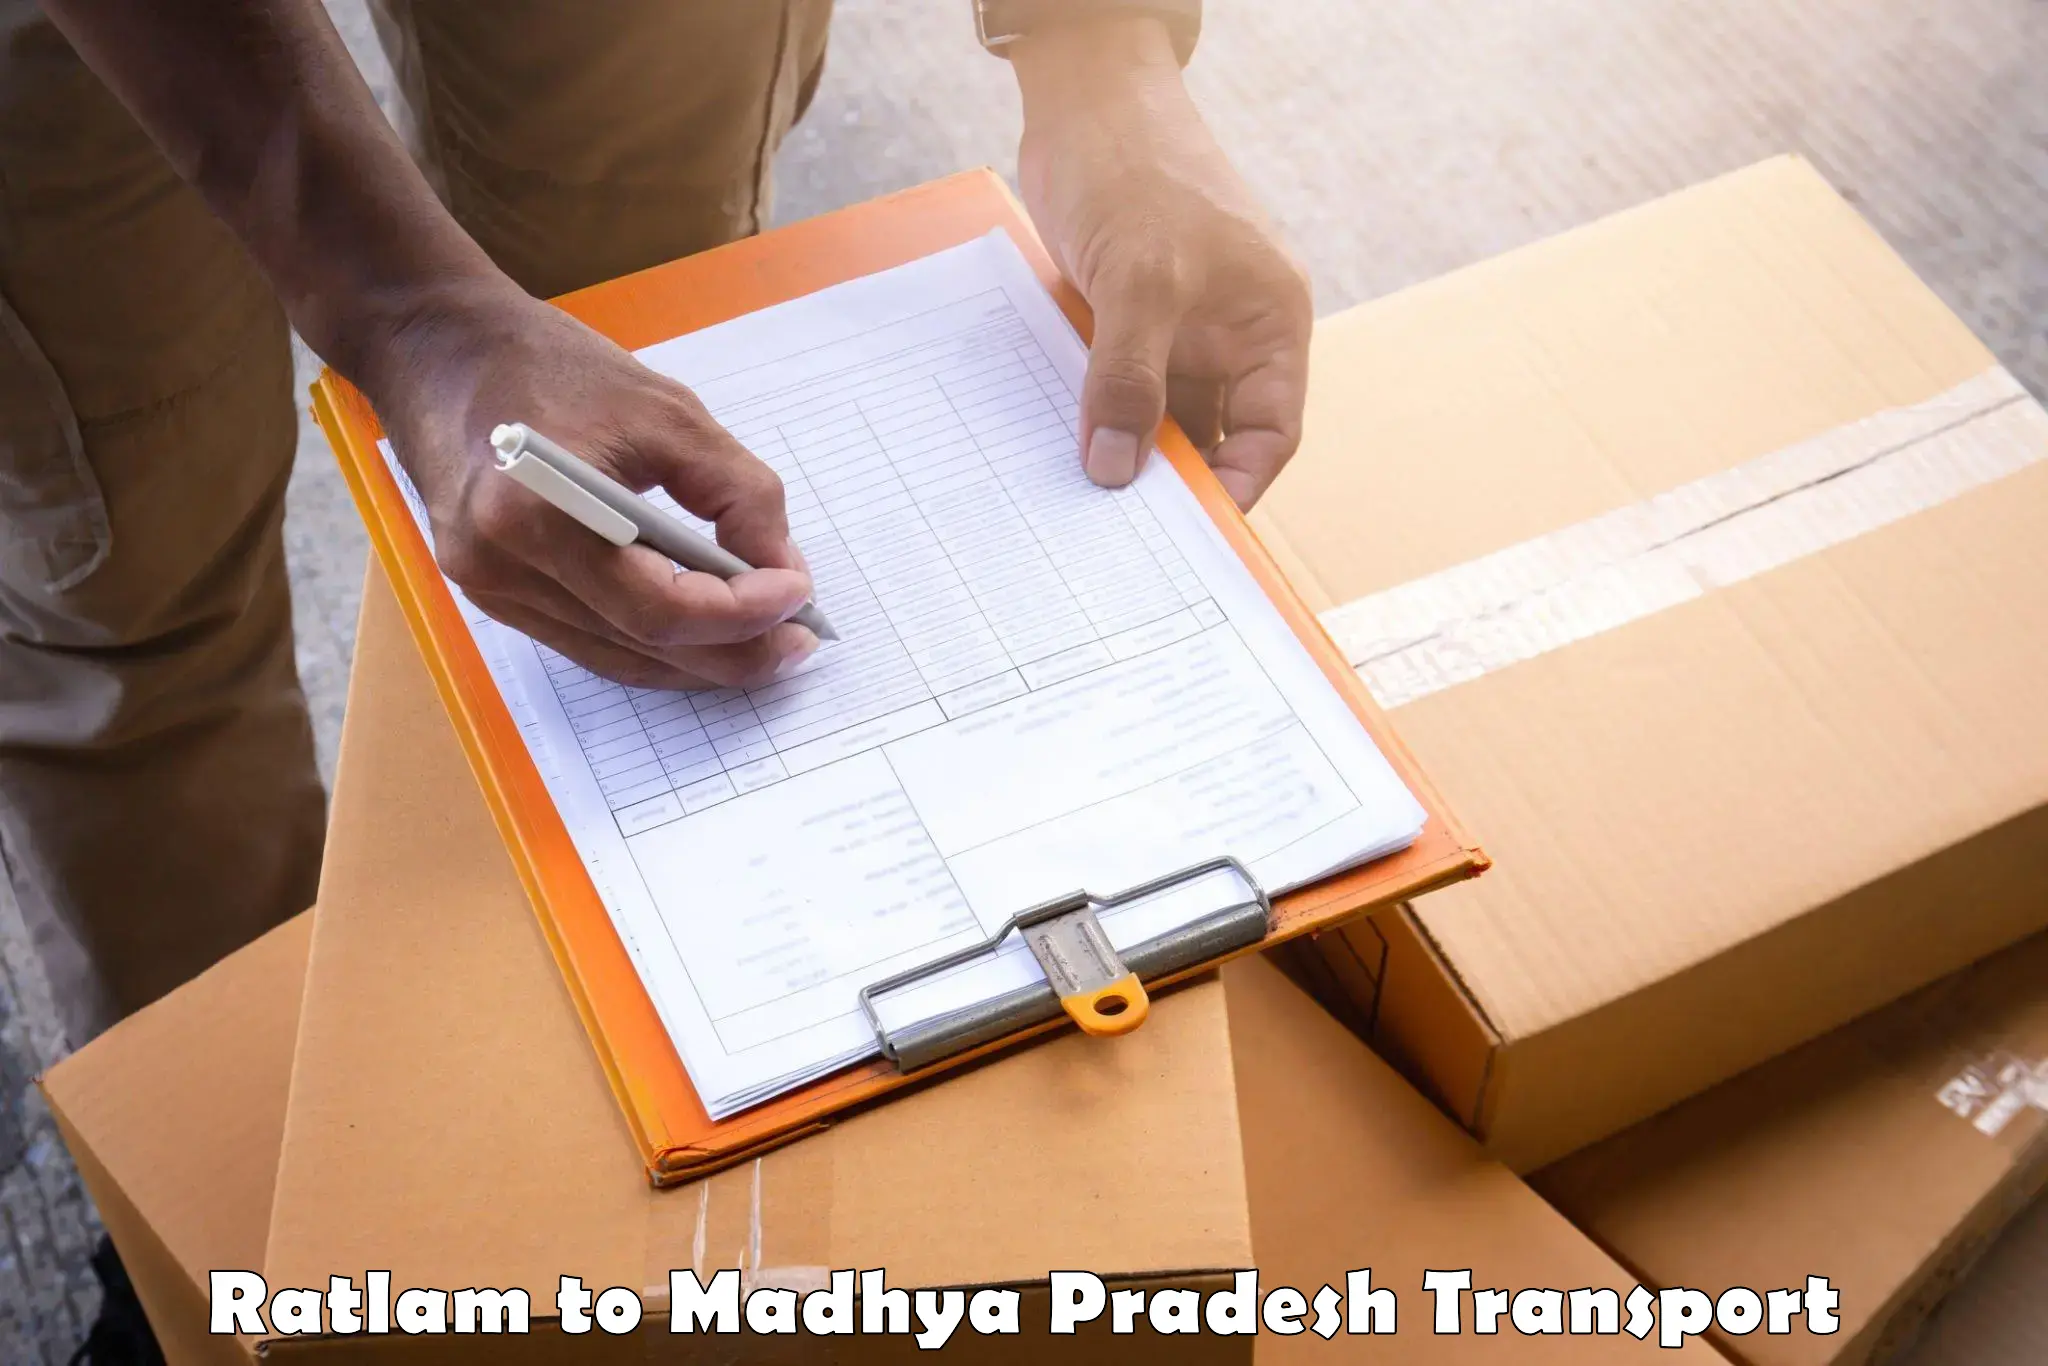 Truck transport companies in India Ratlam to Harda